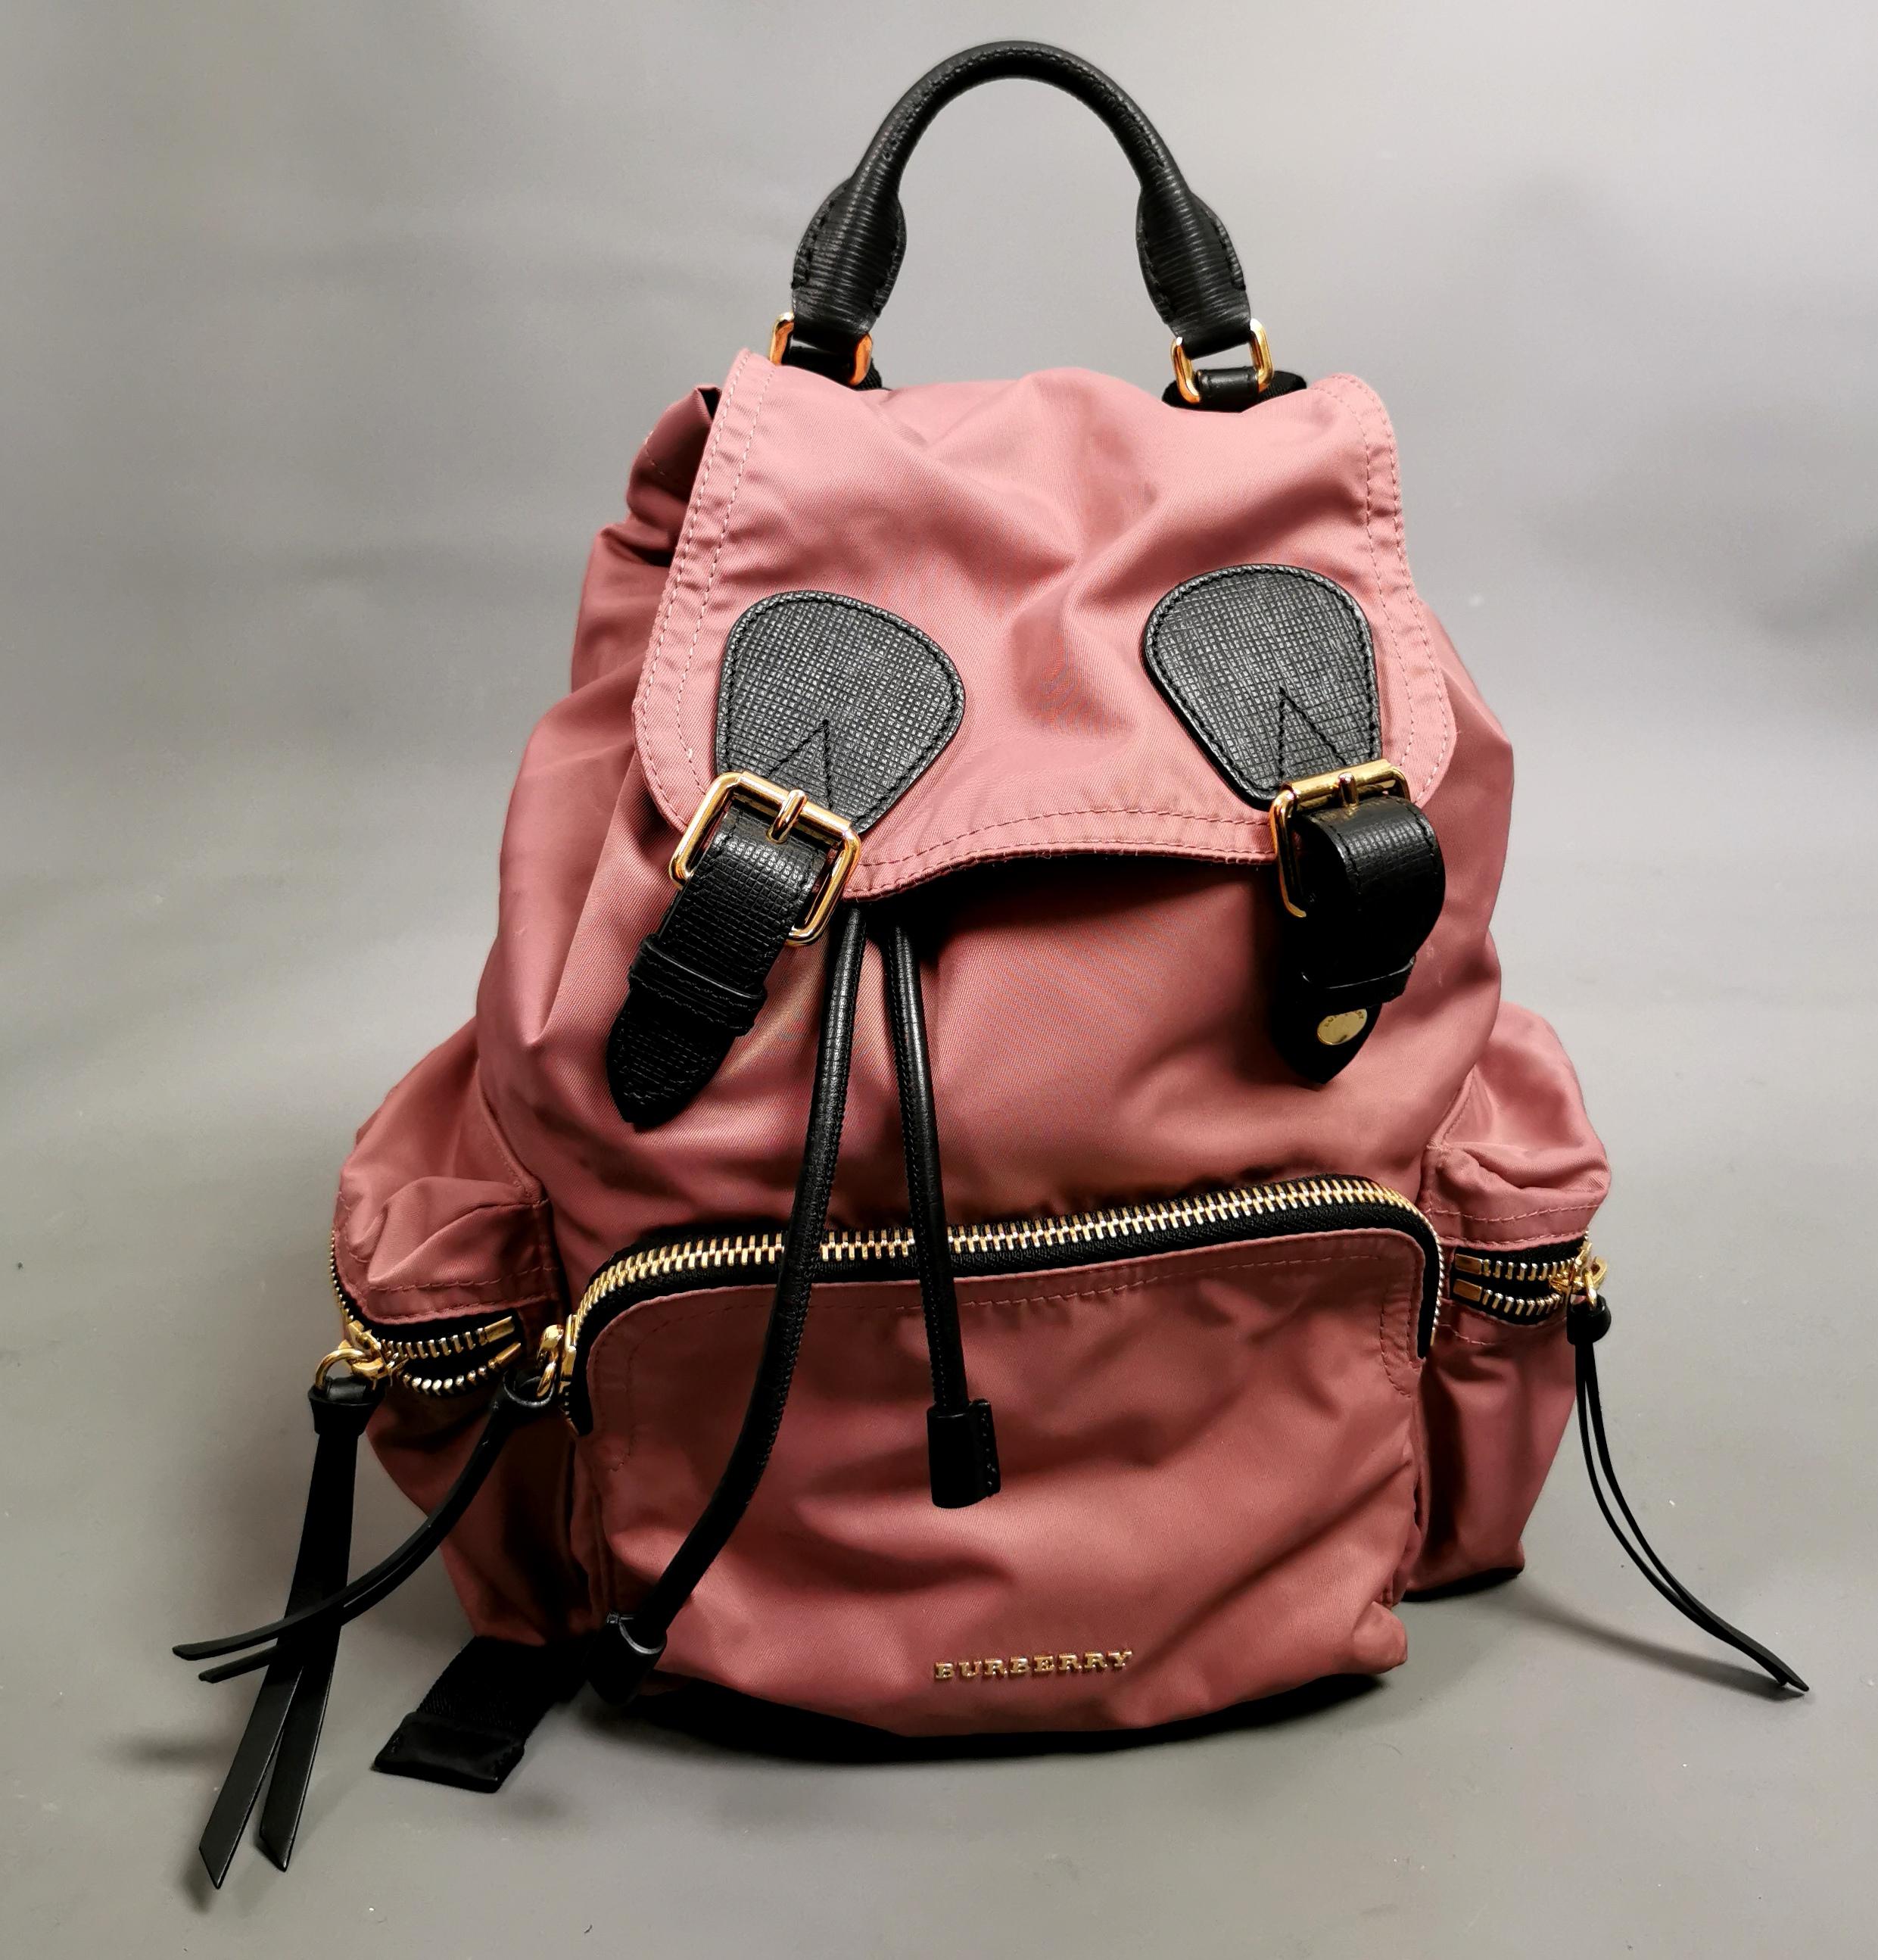 Burberry The Rucksack, pink nylon backpack, gold tone hardware  8